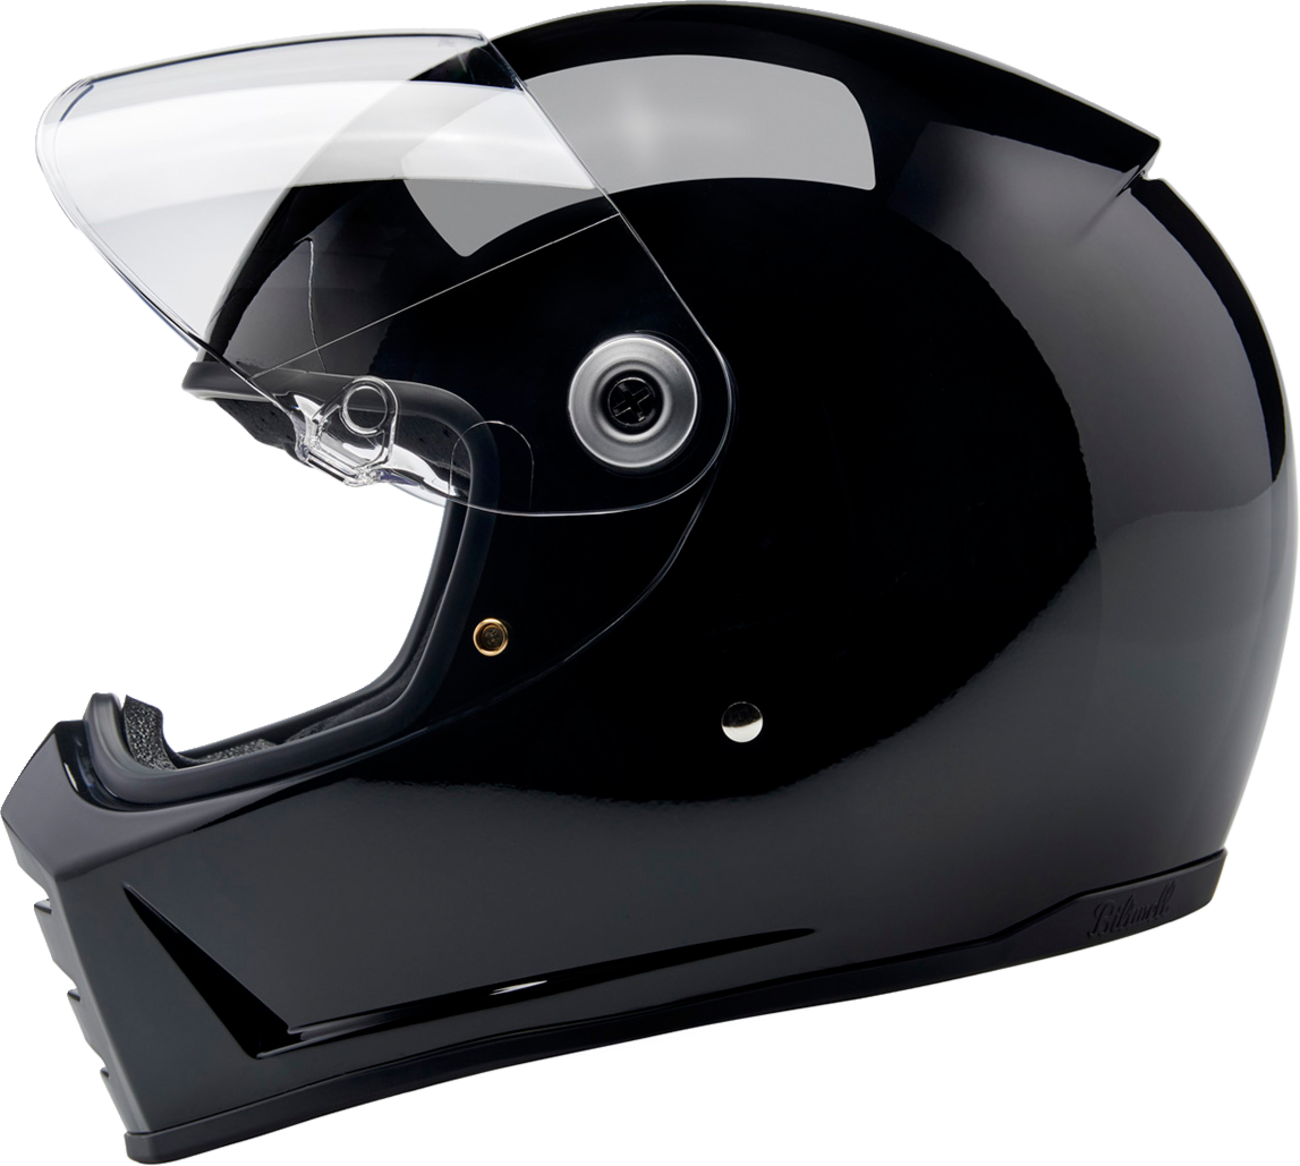 BILTWELL Lane Splitter Helmet - Gloss Black - 2XL 1004-101-506